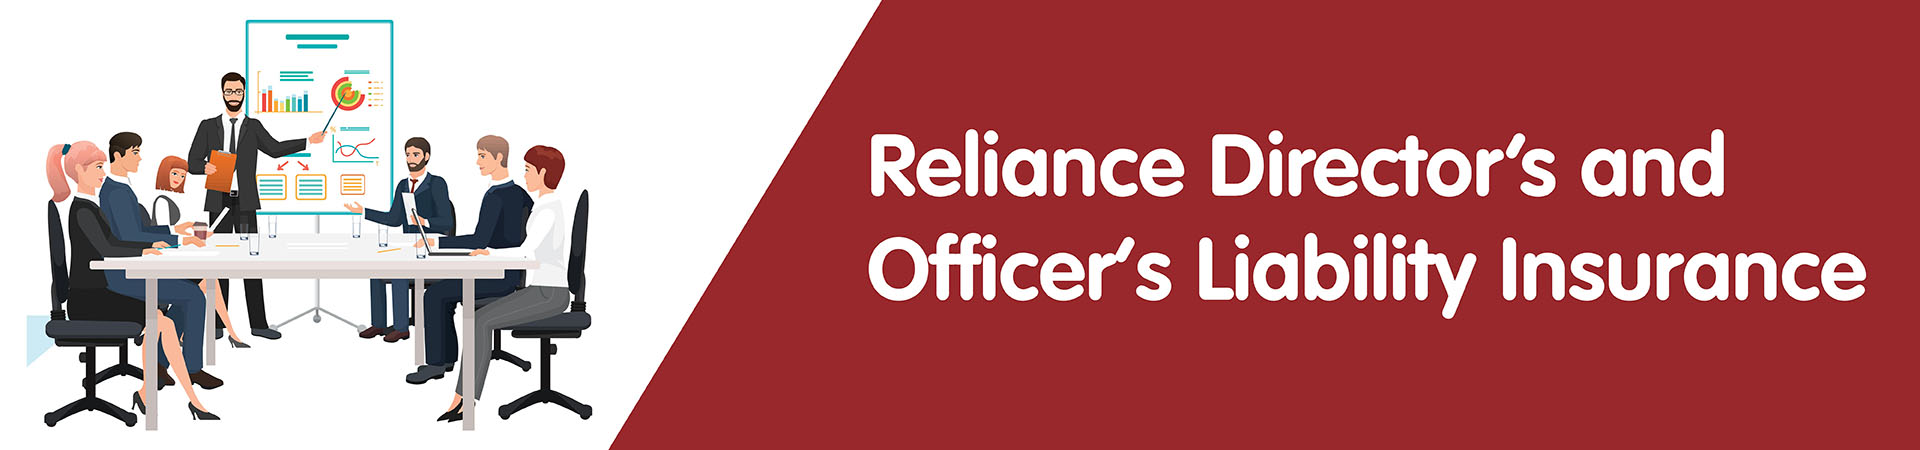 NRI-reliance directors office liability